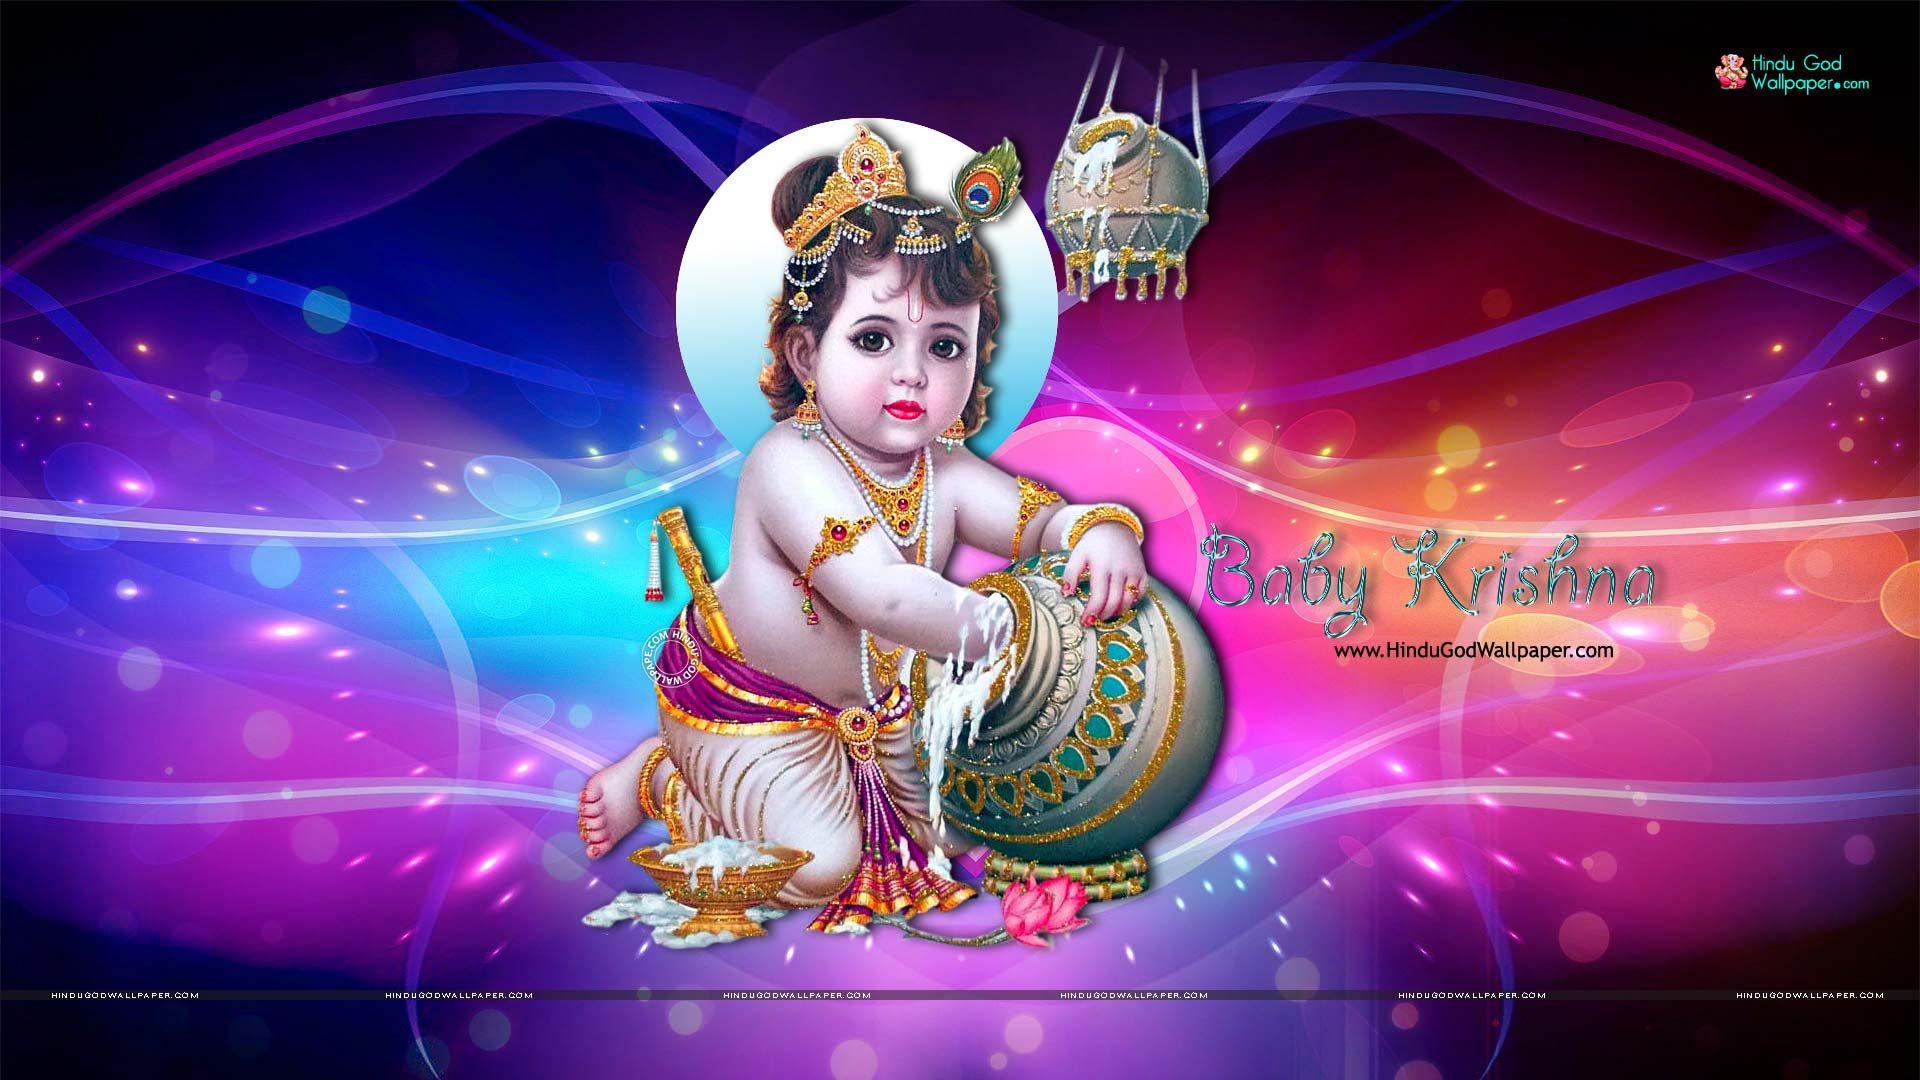 Shri Krishna 1080p Desktop Wallpapers - Wallpaper Cave